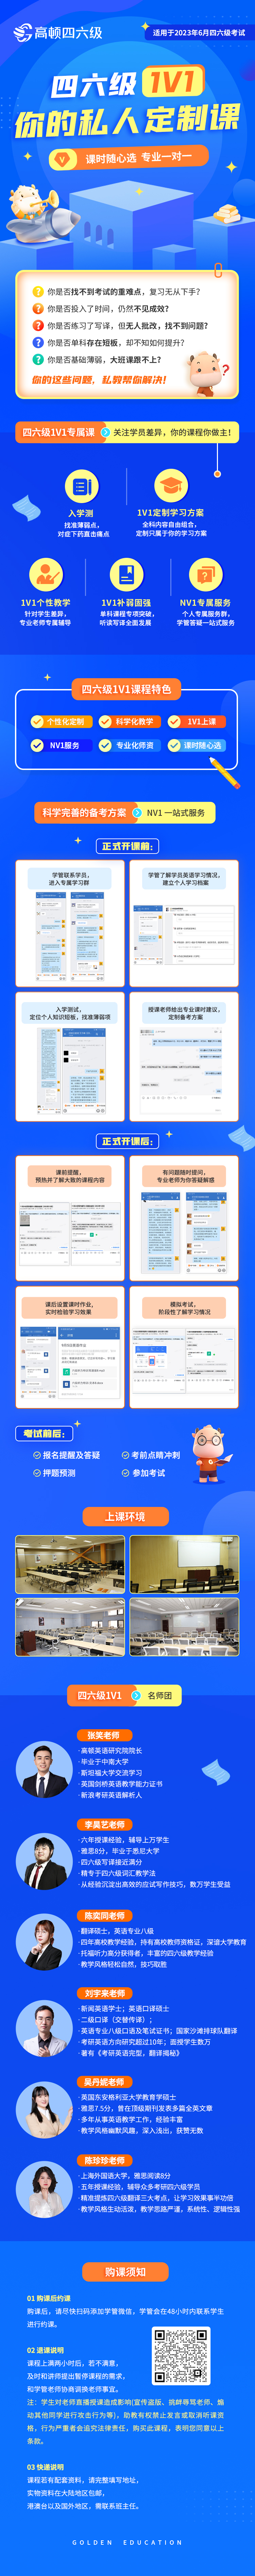 https://simg01.gaodunwangxiao.com/uploadfiles/product-center/202212/07/9d44f_20221207165749.jpg